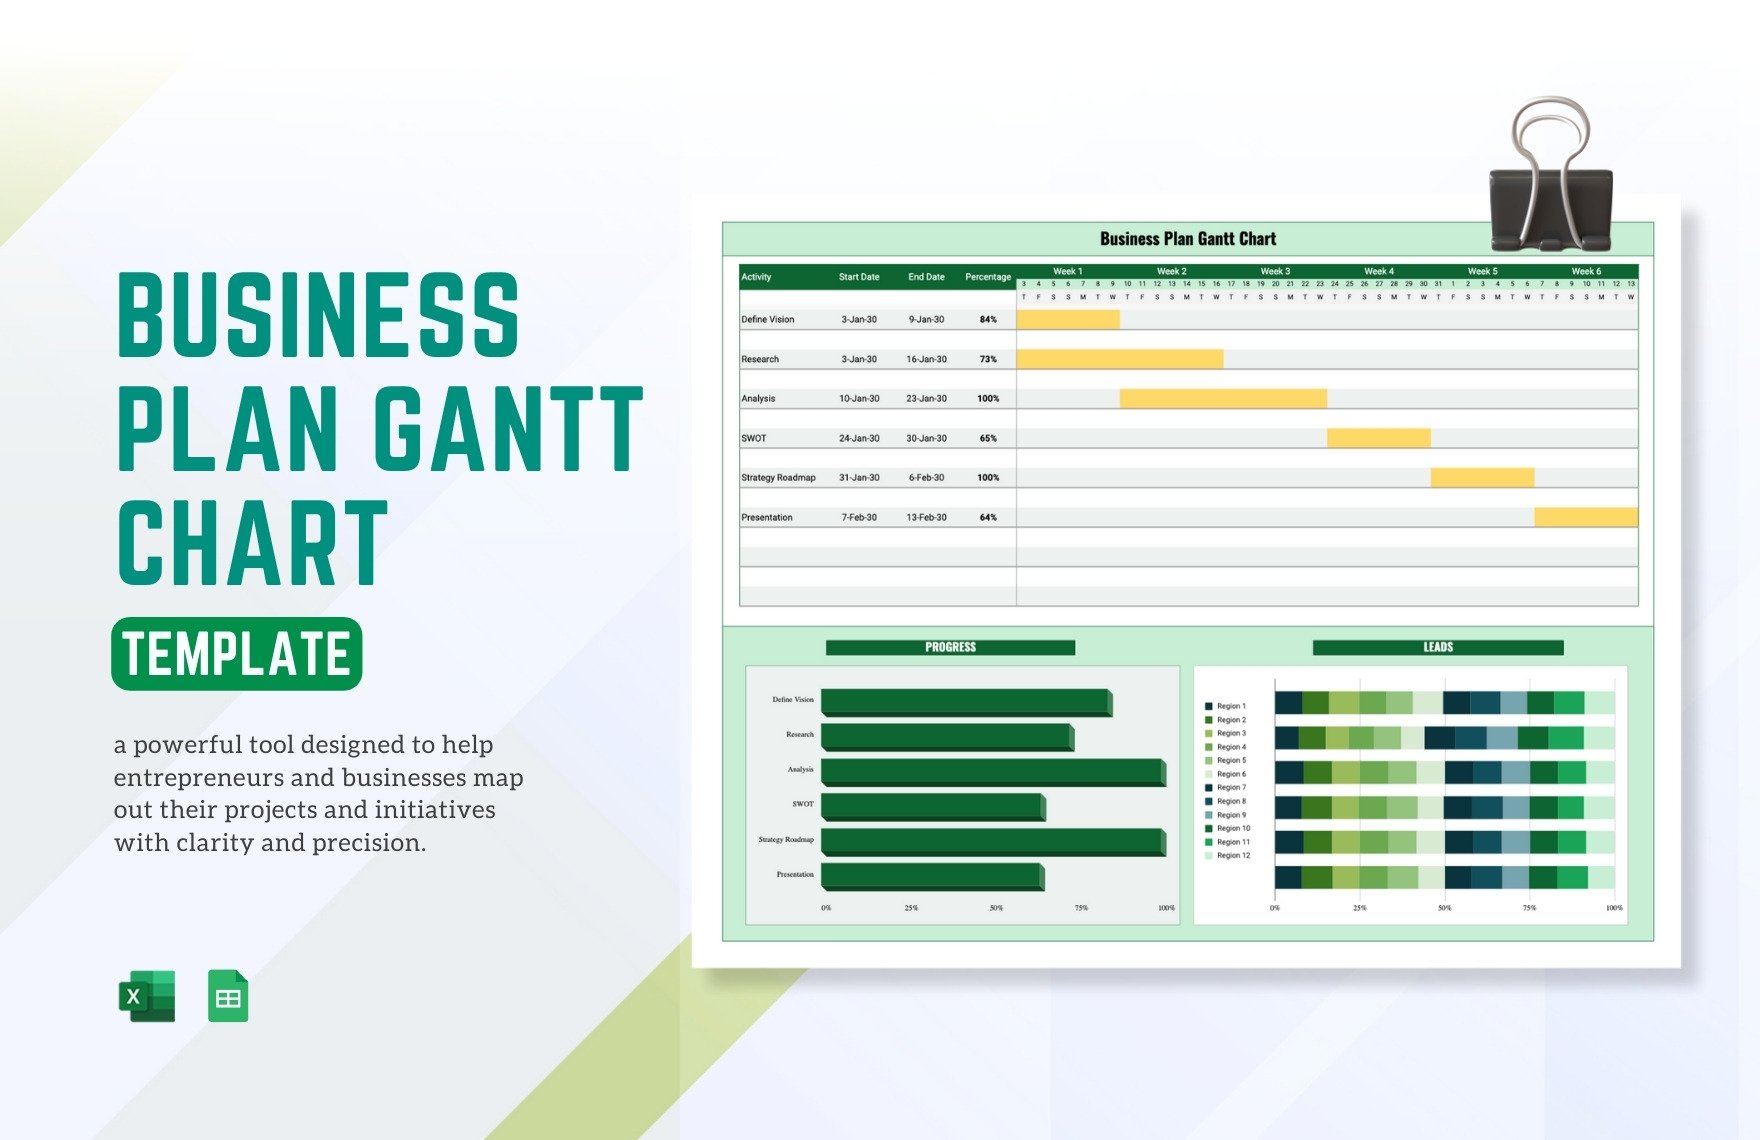 Business Plan Gantt Chart Template in Excel, Google Sheets